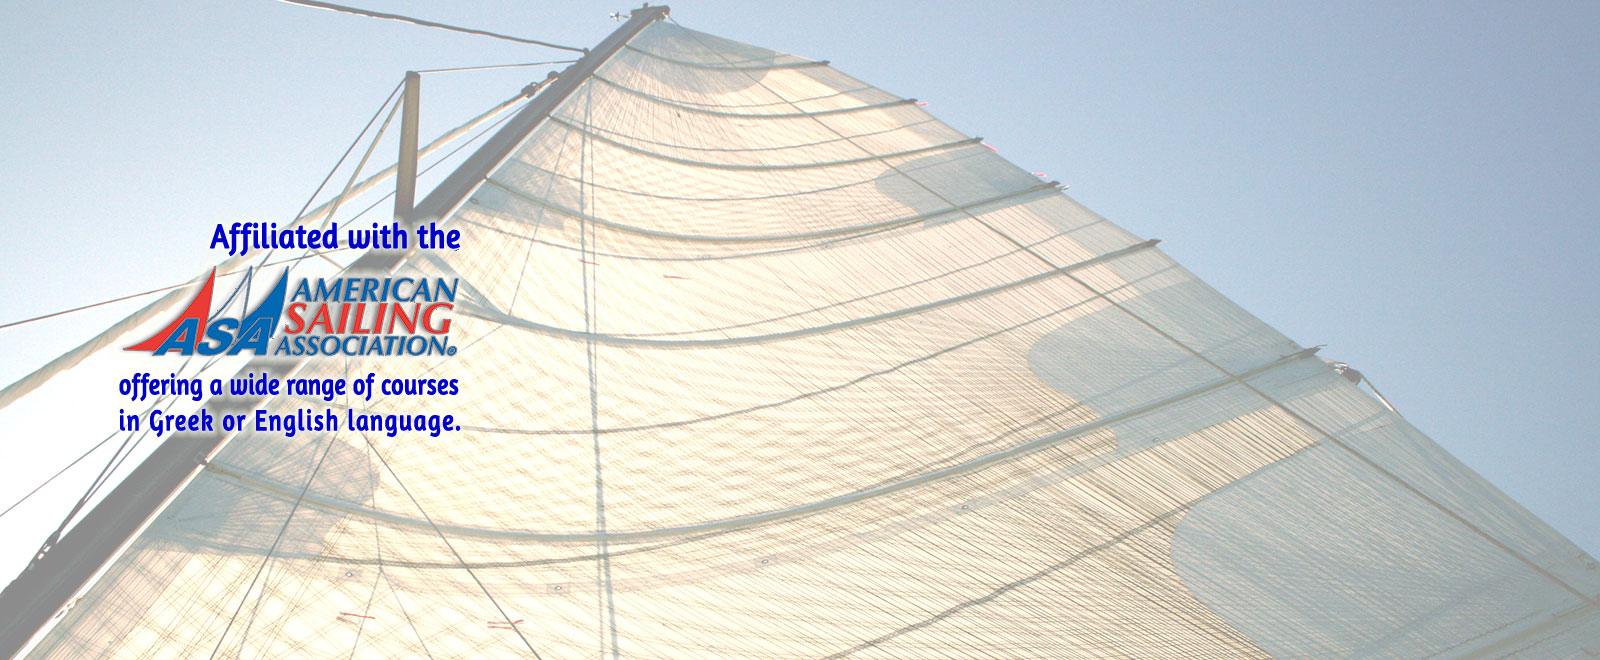 cyprus yachting life